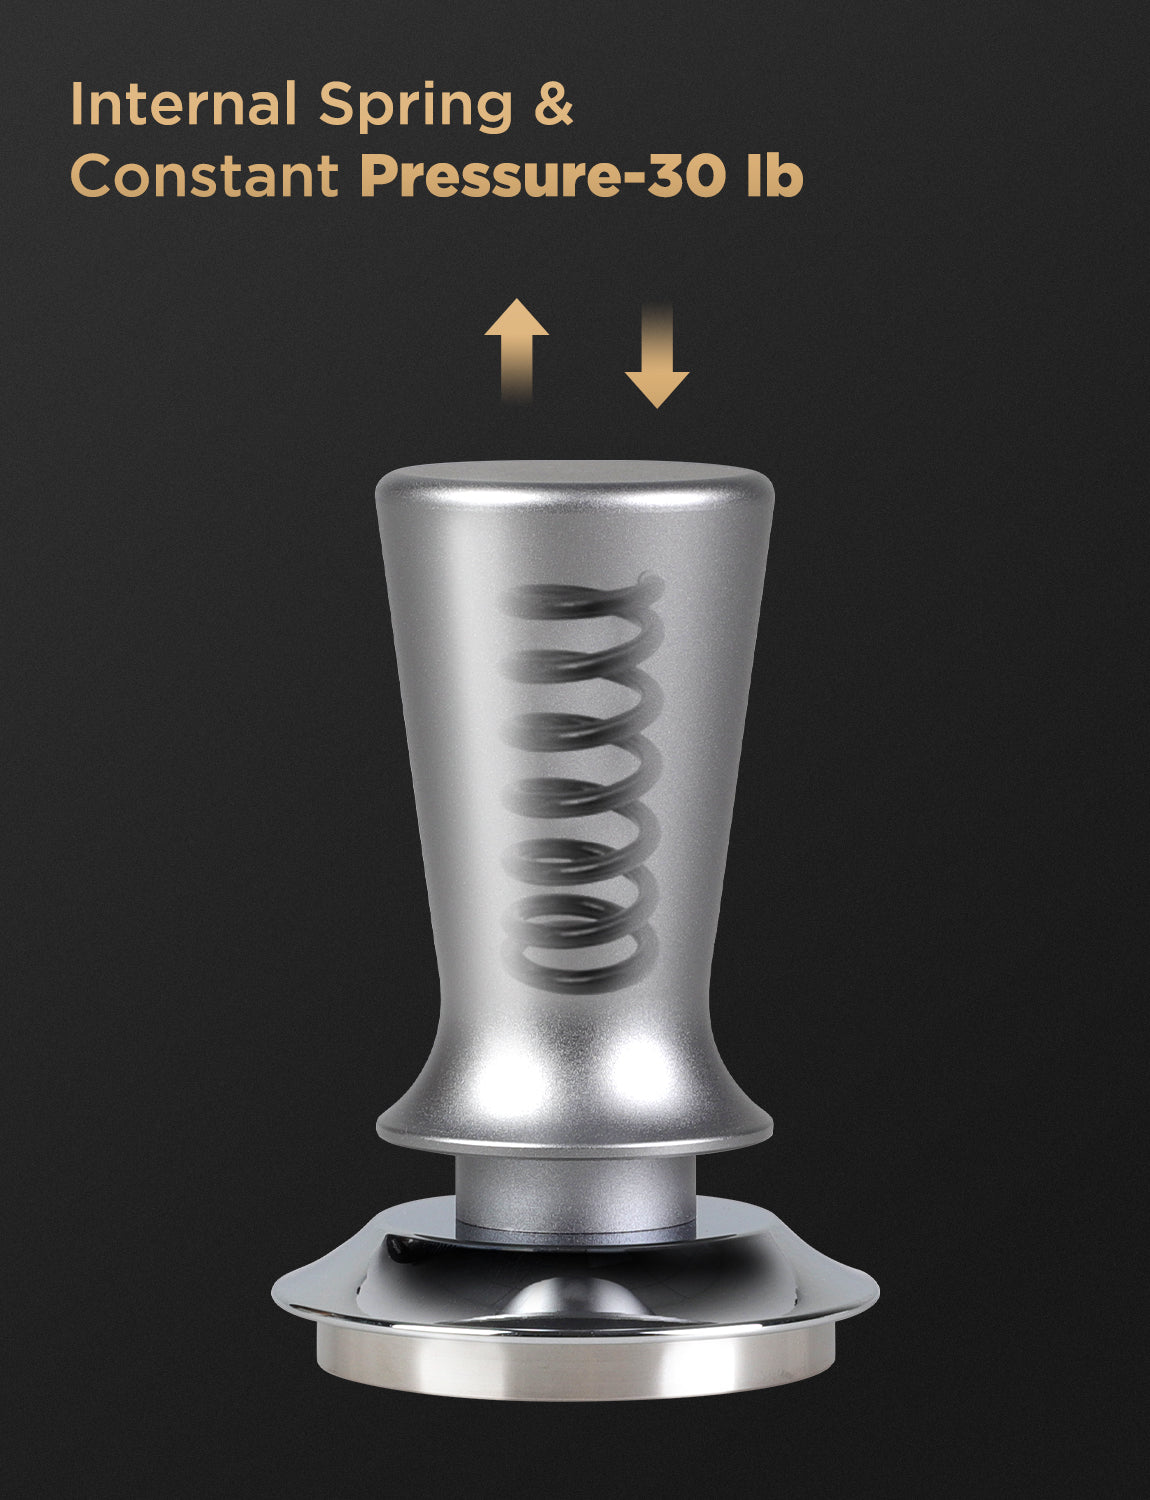 Adjustable Depth Coffee Tamper Calibrated Steady Pressure Espresso